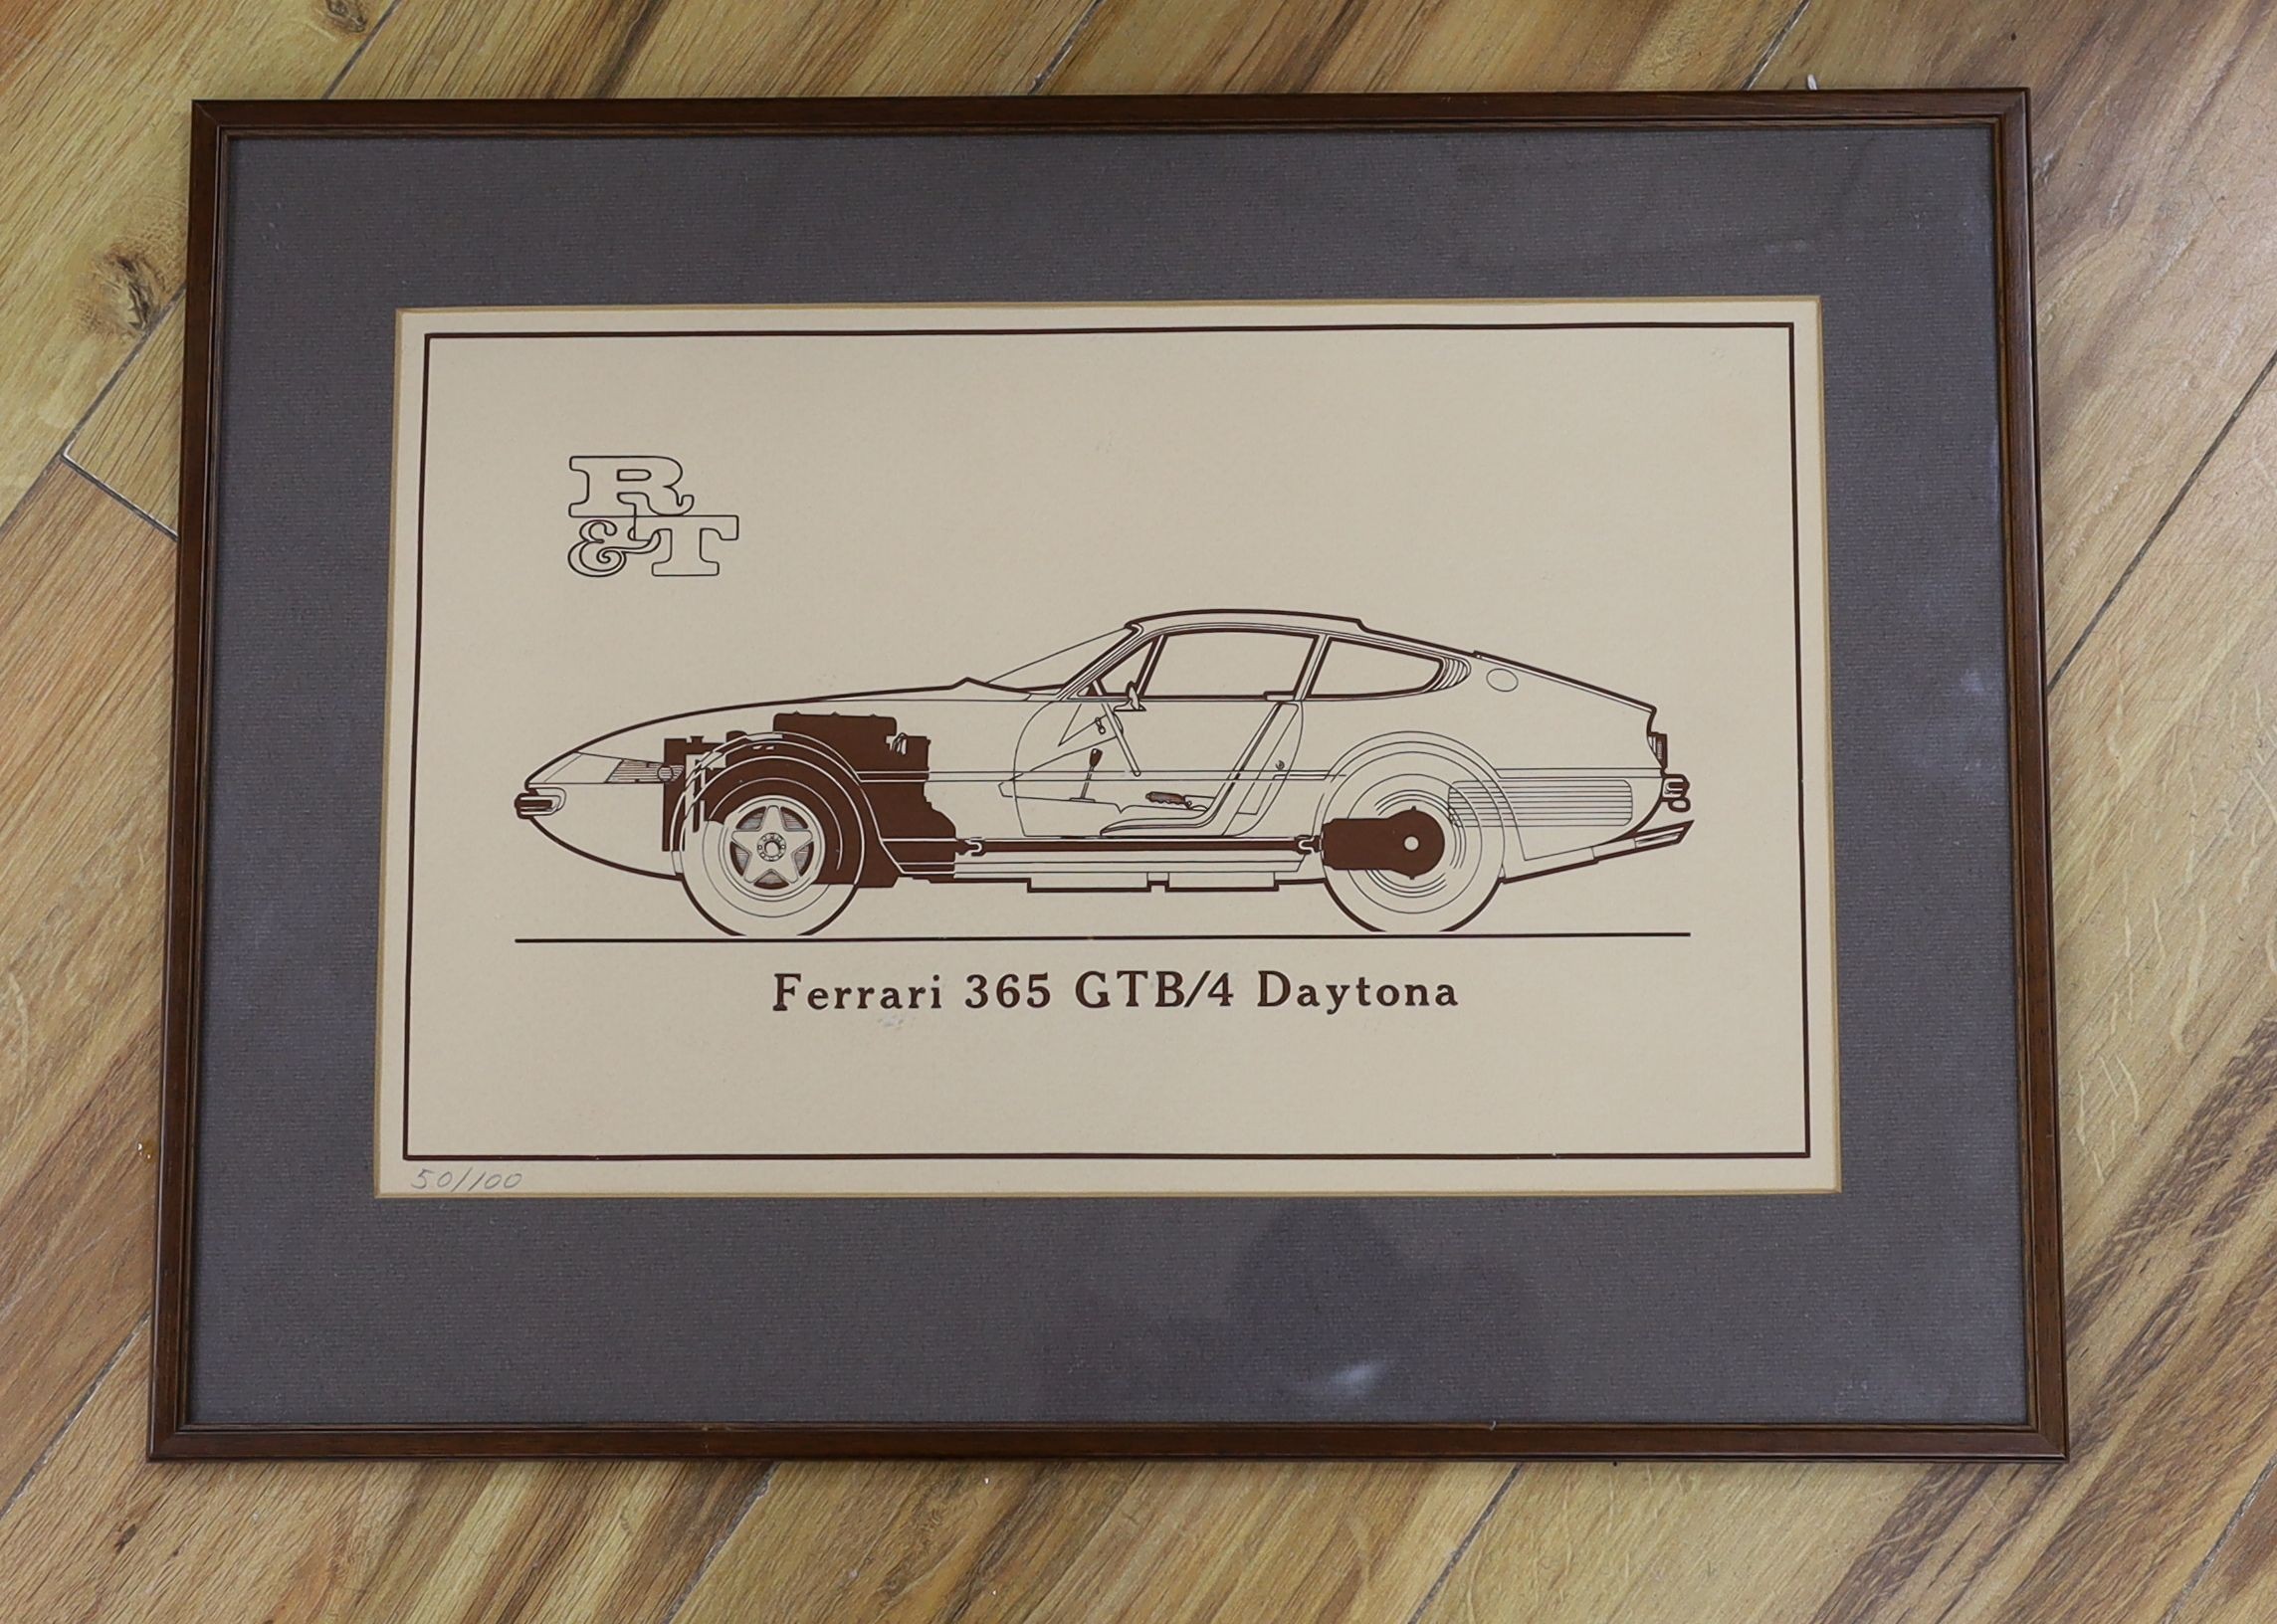 A limited edition sectional print, "Ferrari, 365 GTB/4 Daytona" , 50/100, 24 x 38cm - Image 2 of 2